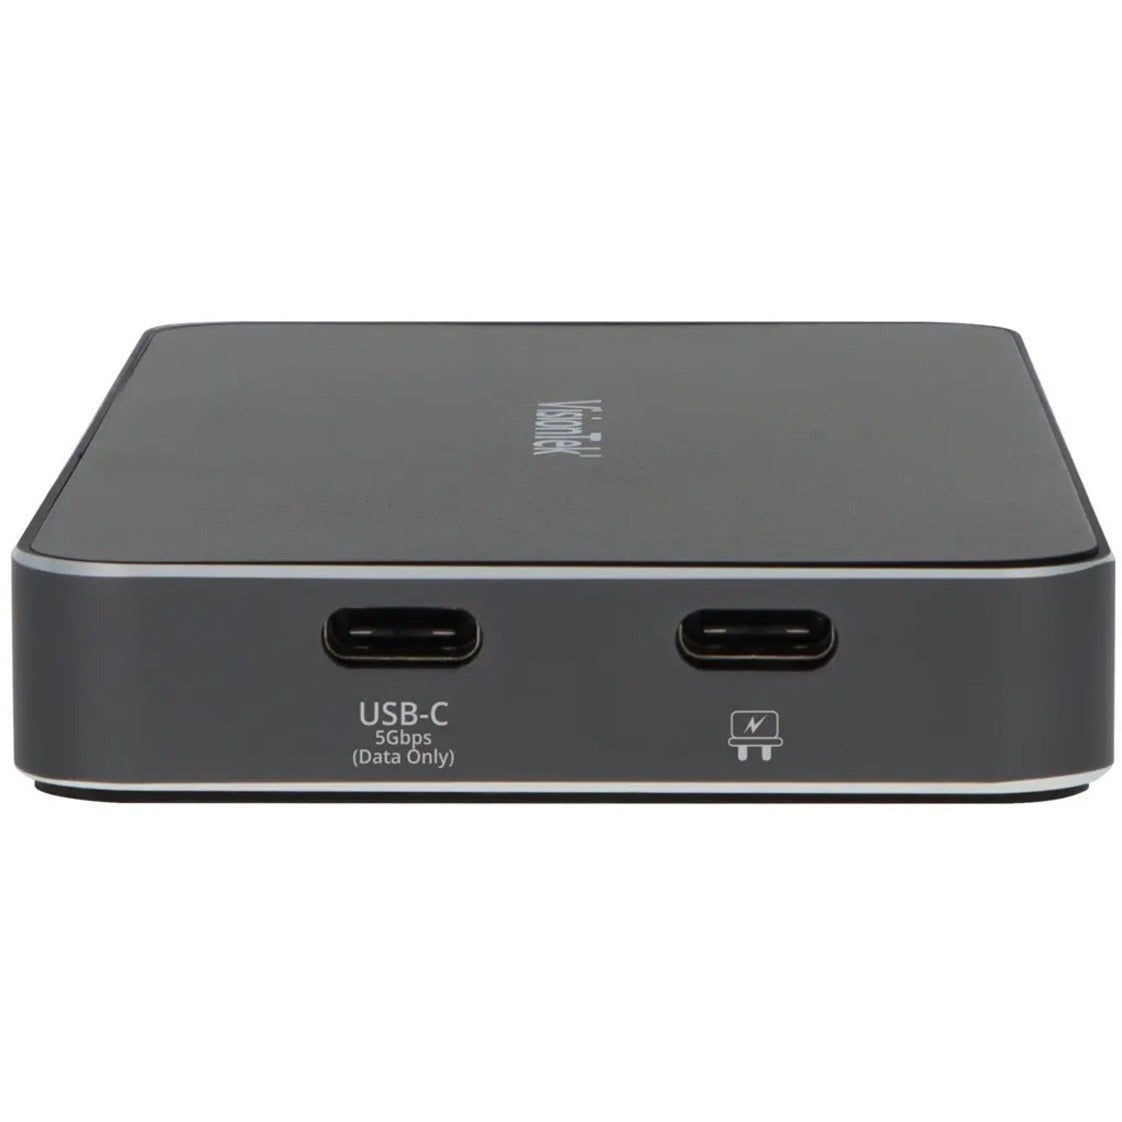 VisionTek 901525 VT210 Dual Display USB-C Docking Station with Power Passthrough, Supports Mac, Windows, ChromeOS